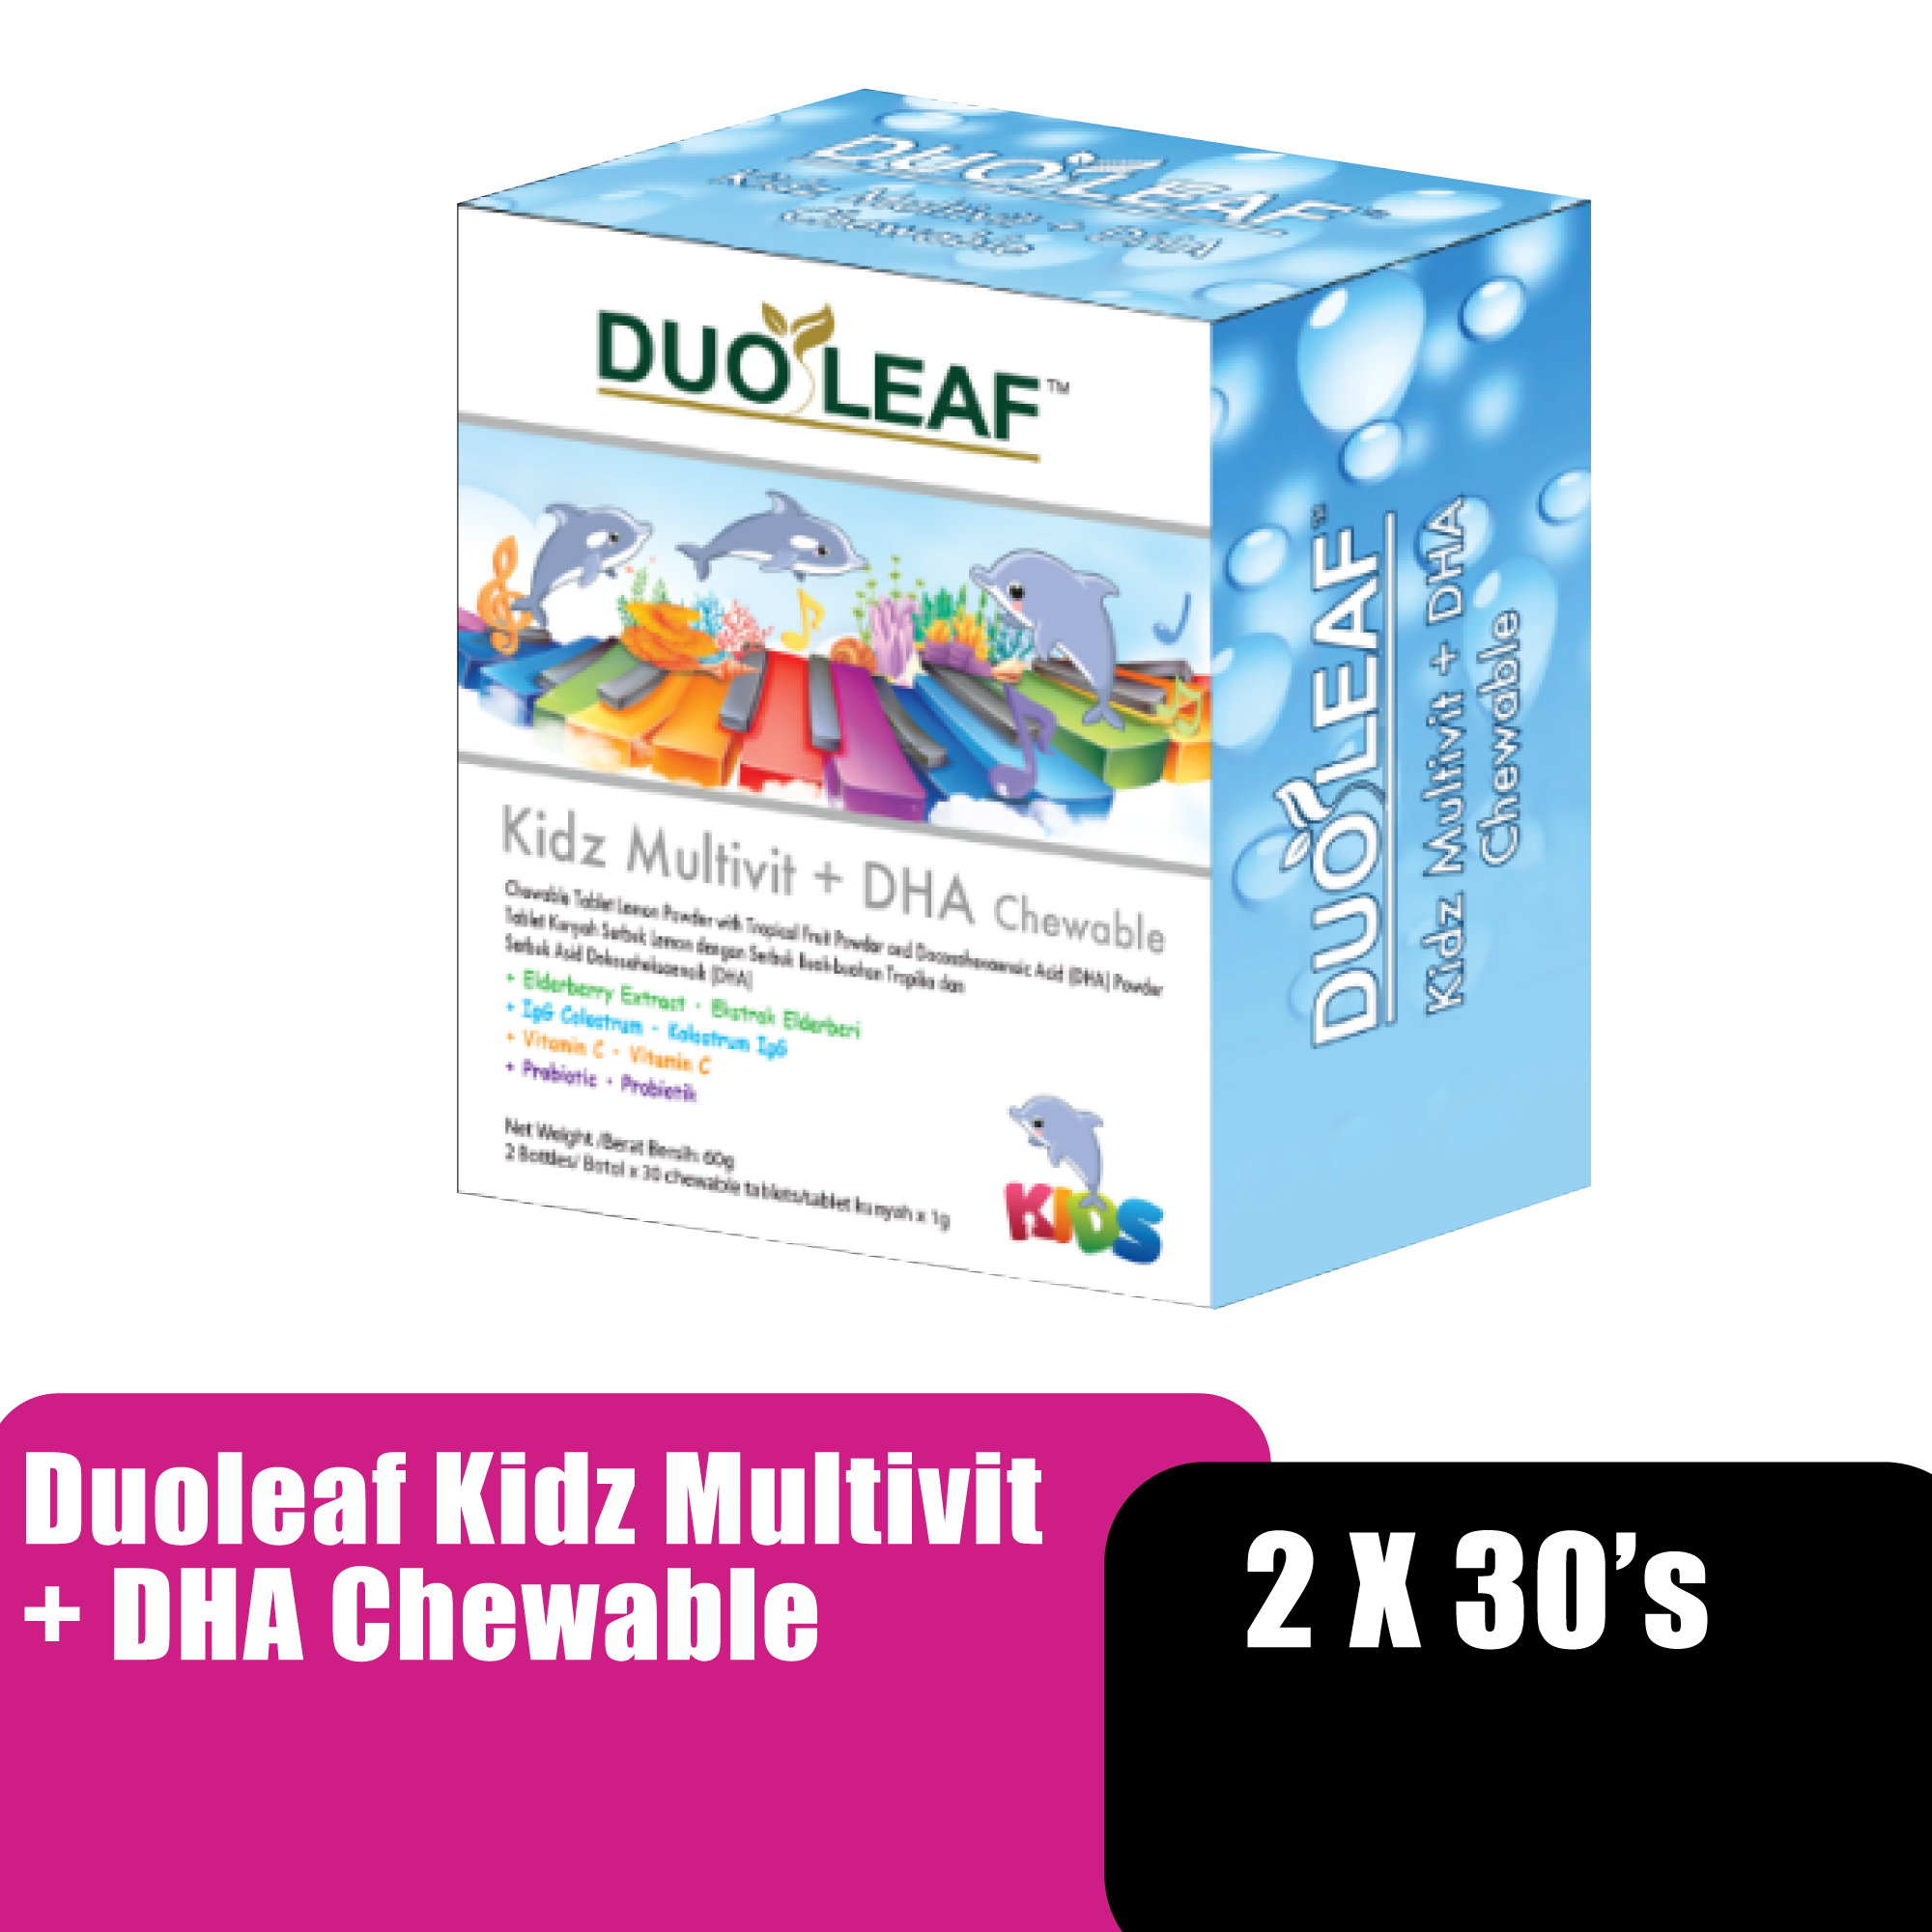 DUOLEAF Kidz Multivitamin + DHA Chewable 2 X 30'S Kids Supplement 小孩保健品维他命维生素